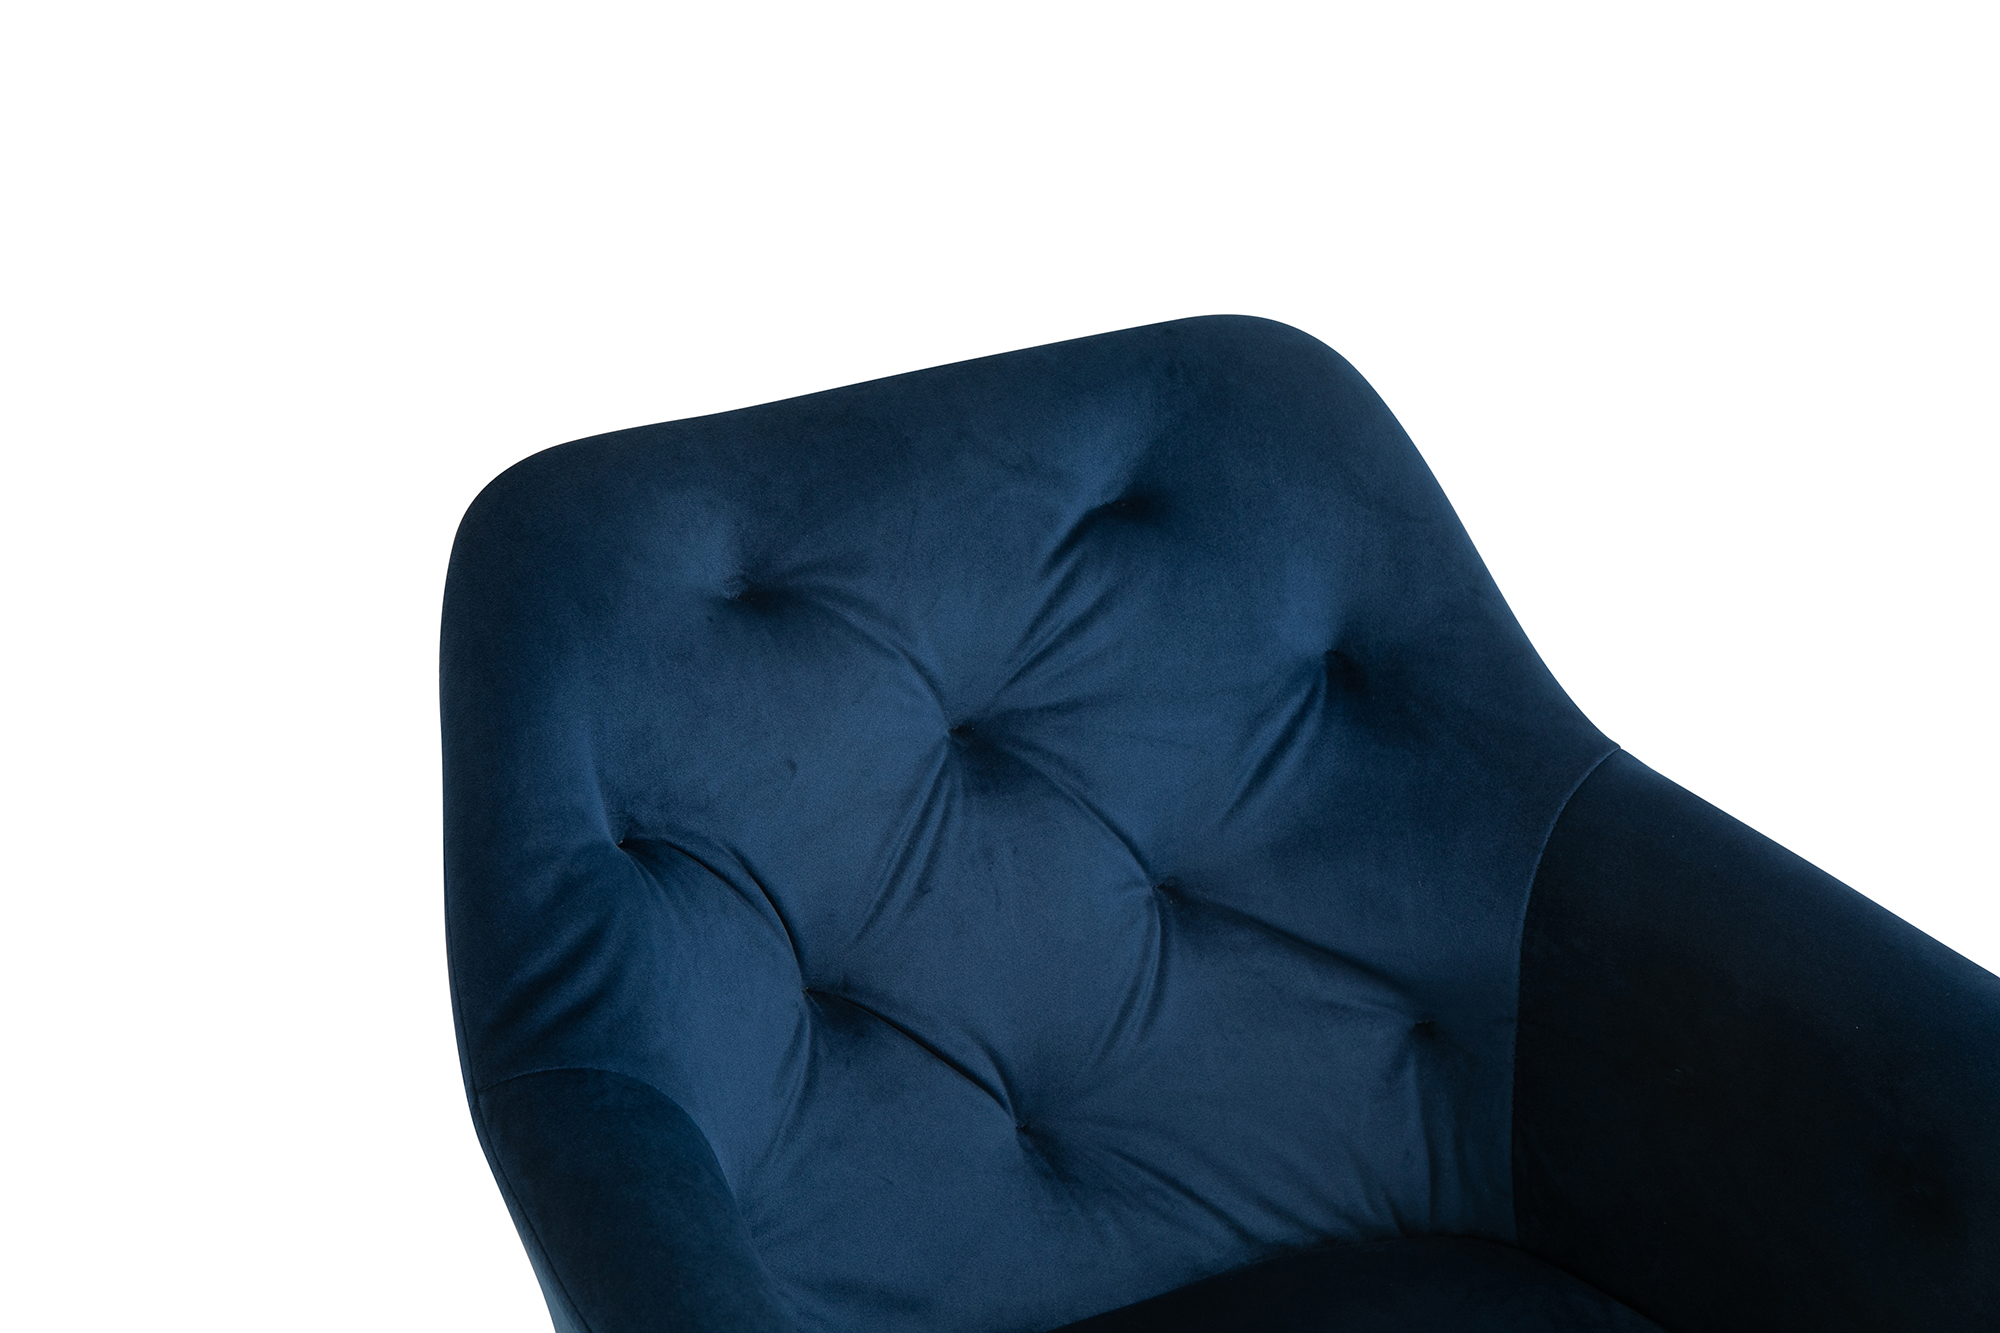 JAYAPURA Stuhl | 511019-1 blau-schwarz |